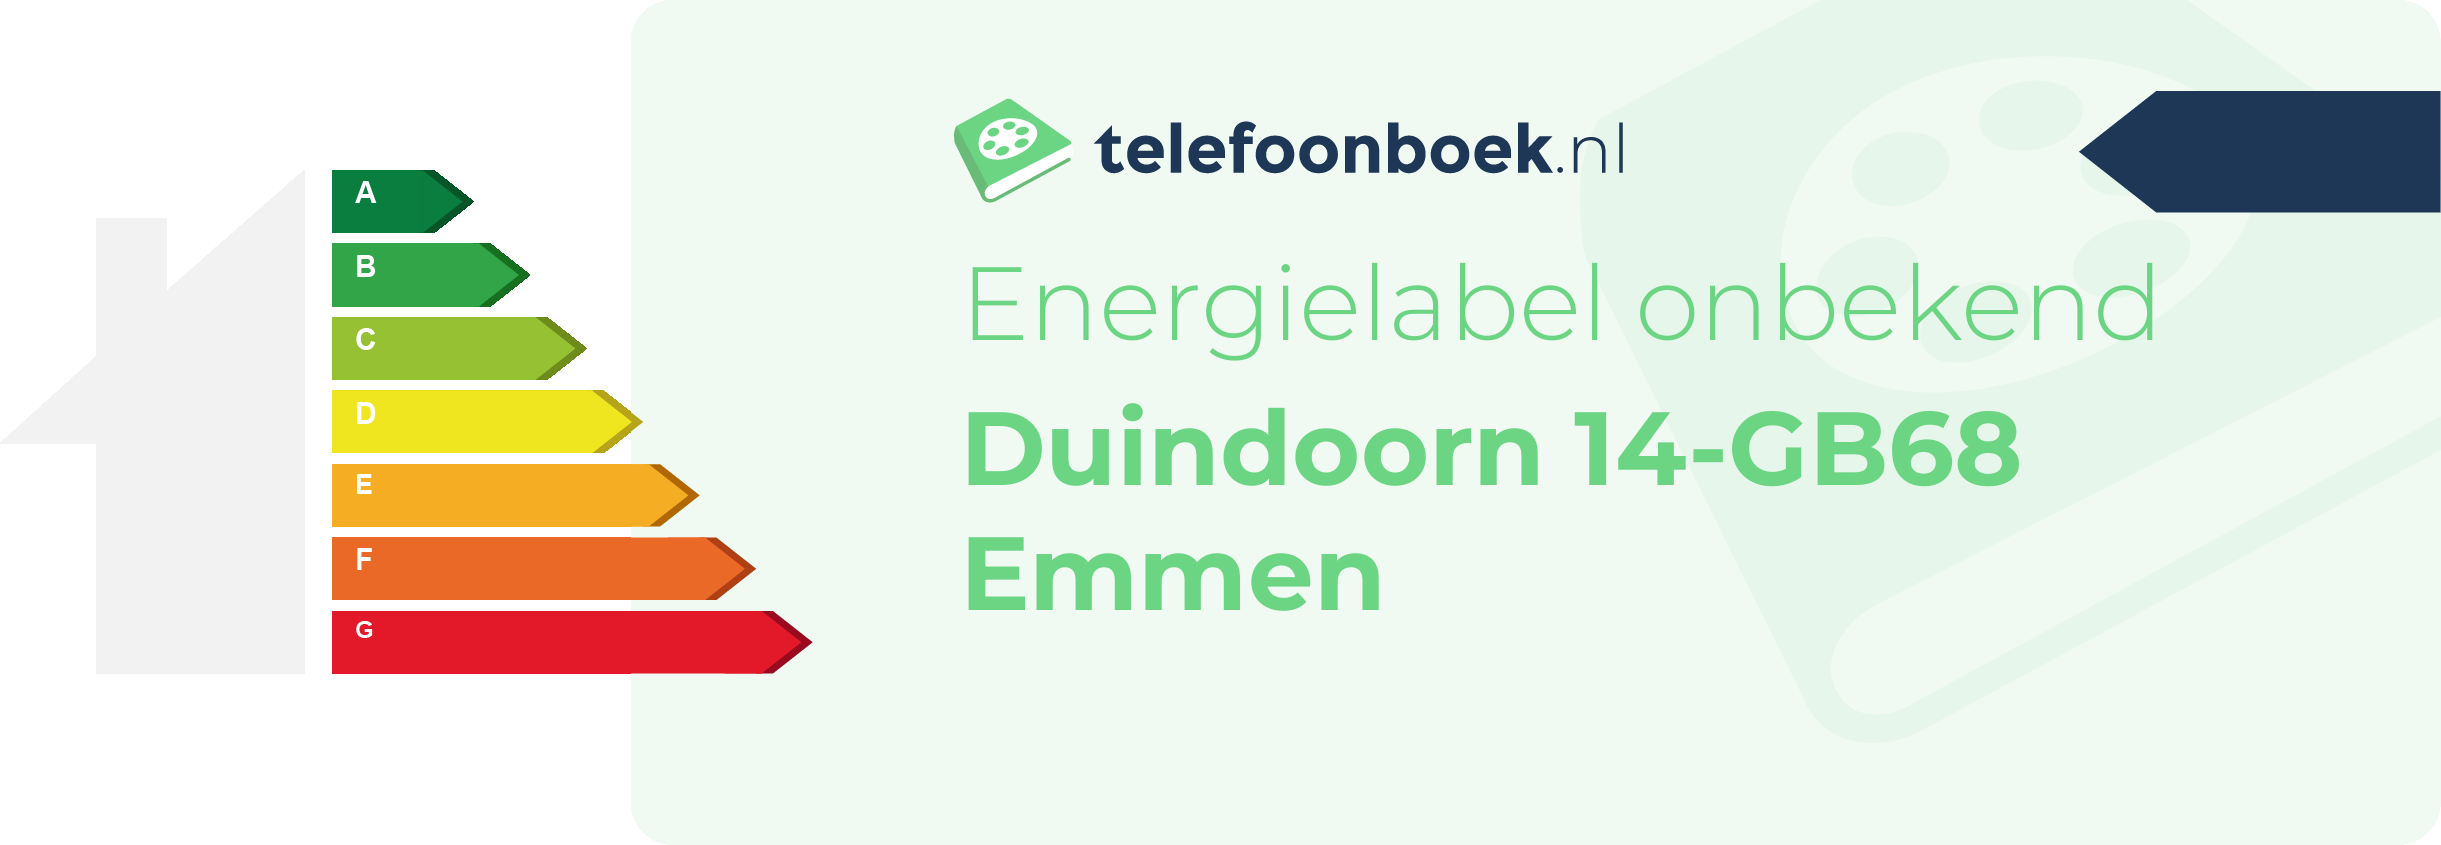 Energielabel Duindoorn 14-GB68 Emmen